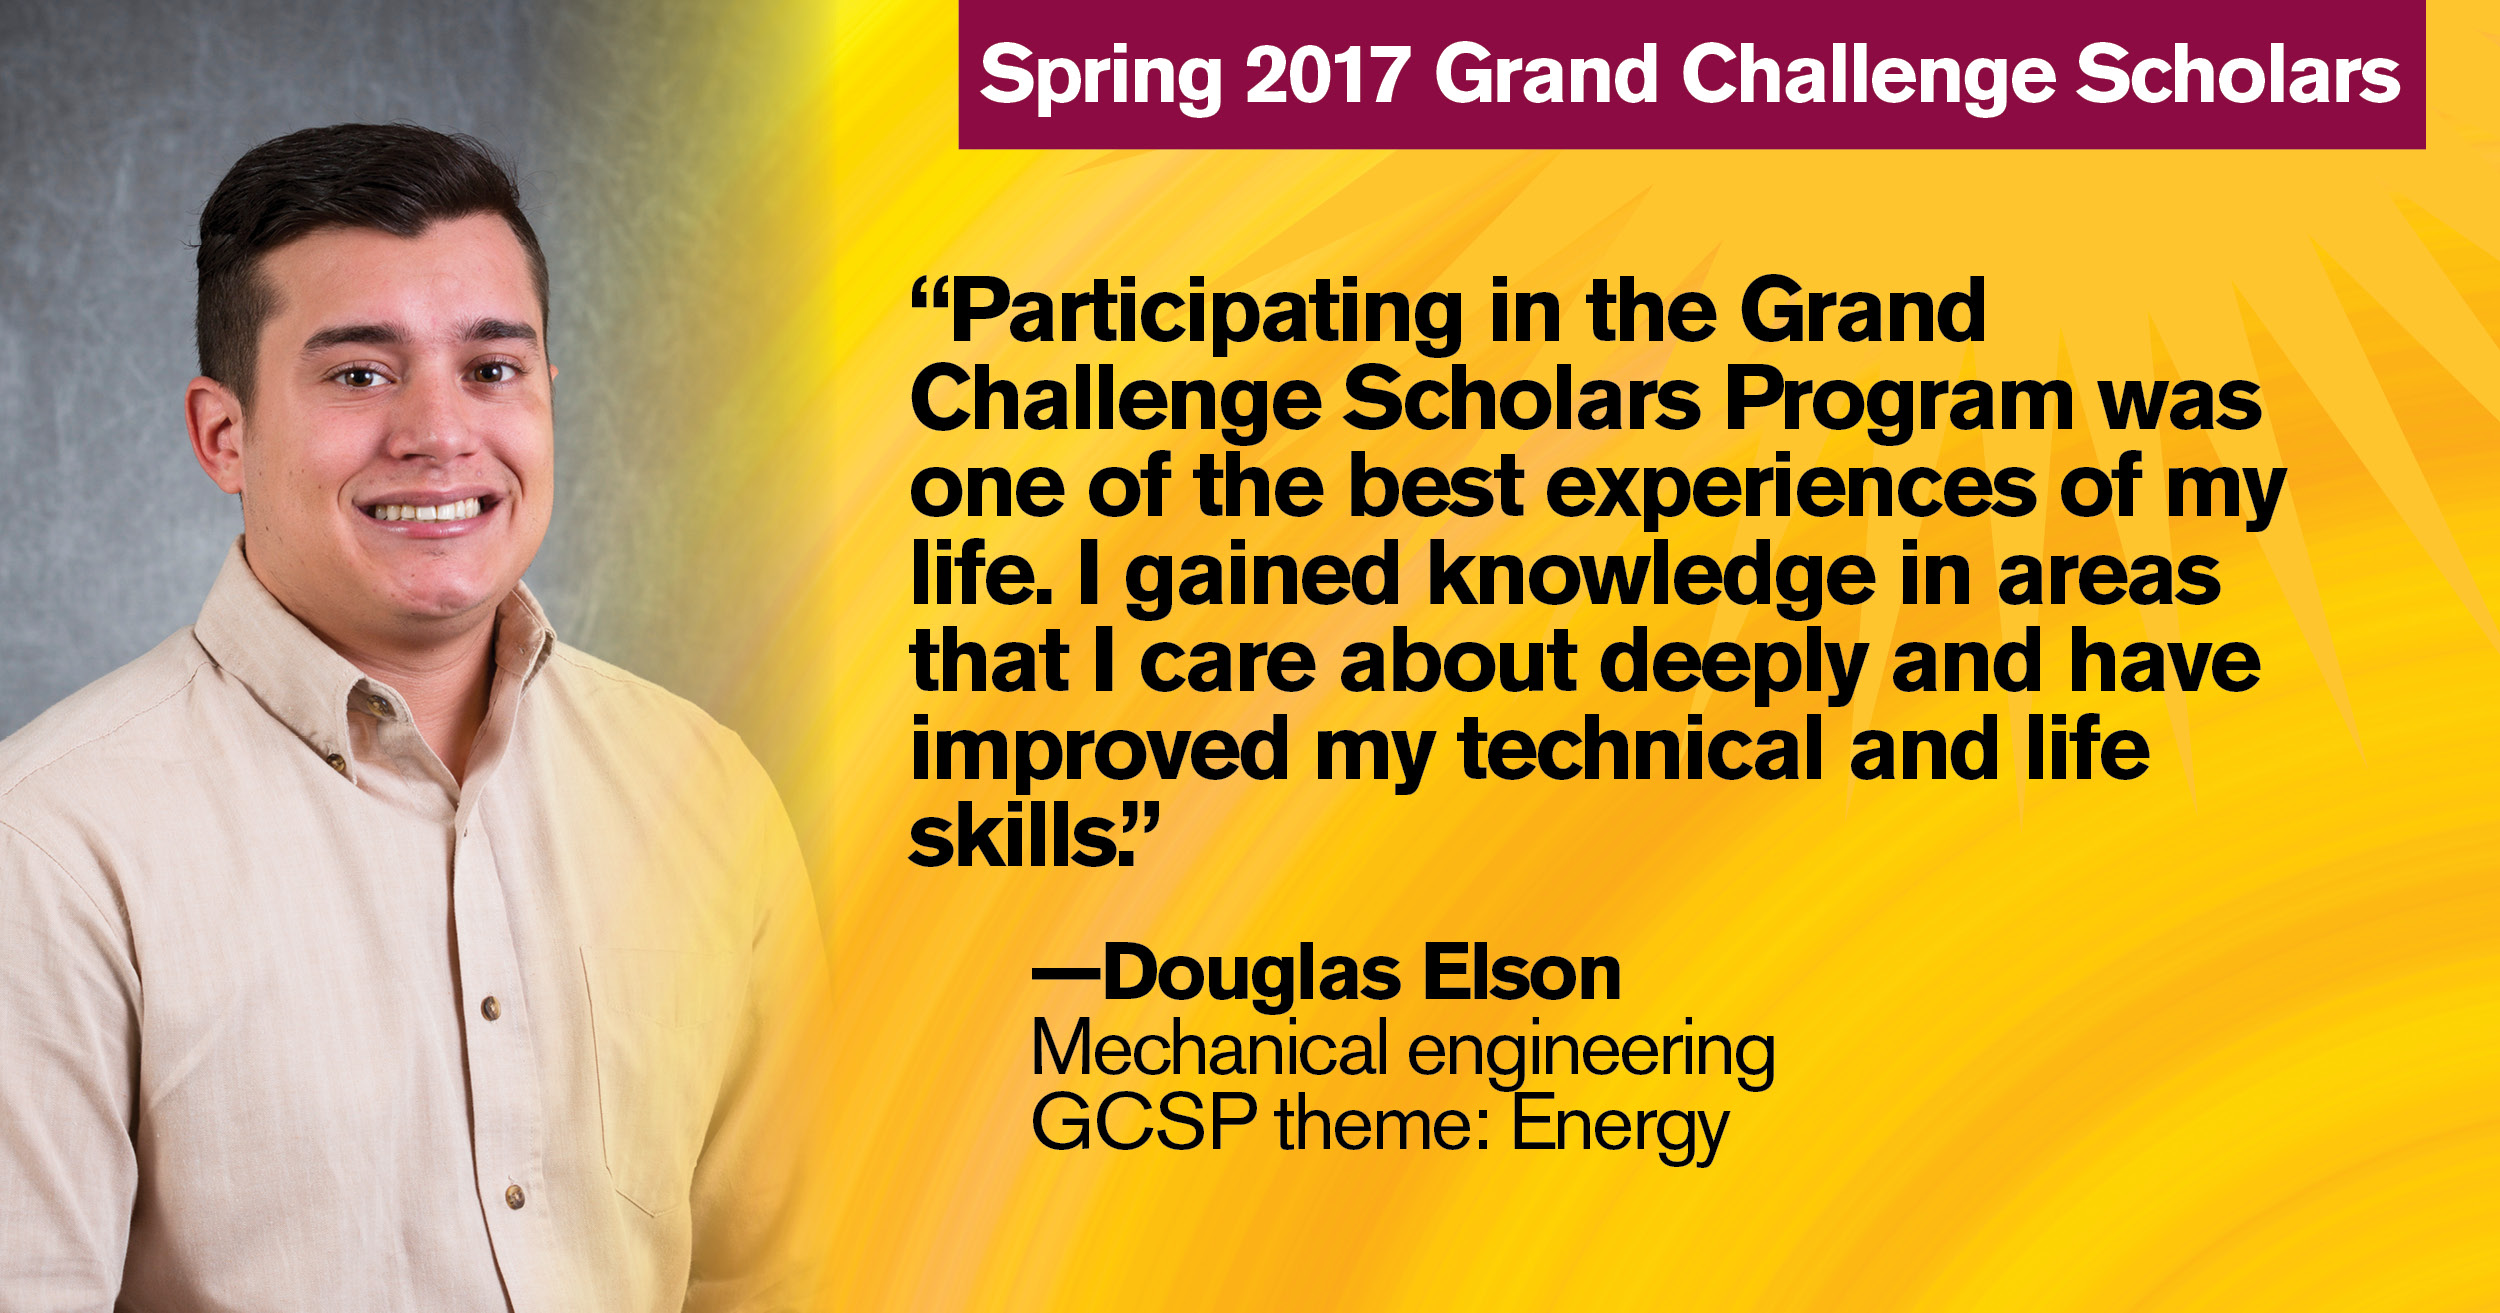 Spring 2017 Grand Challenge Scholar Douglas Elson